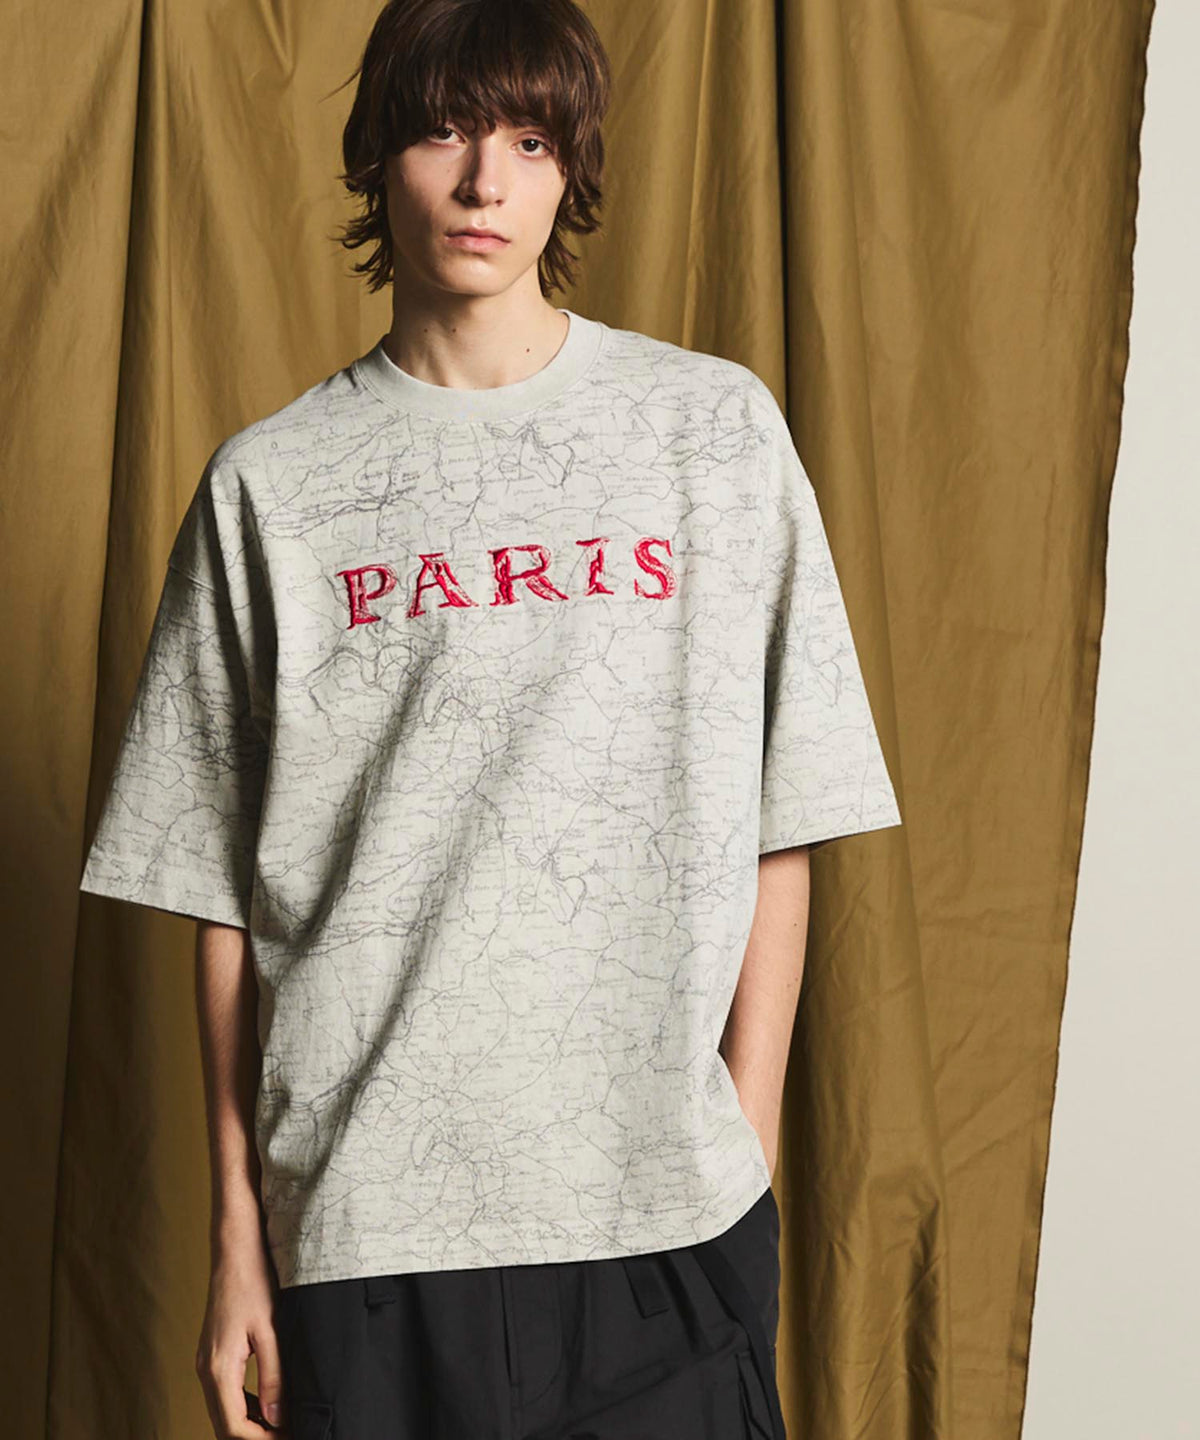 「PARIS」Embroidery Prime-Over Pigment Crew Neck T-Shirt